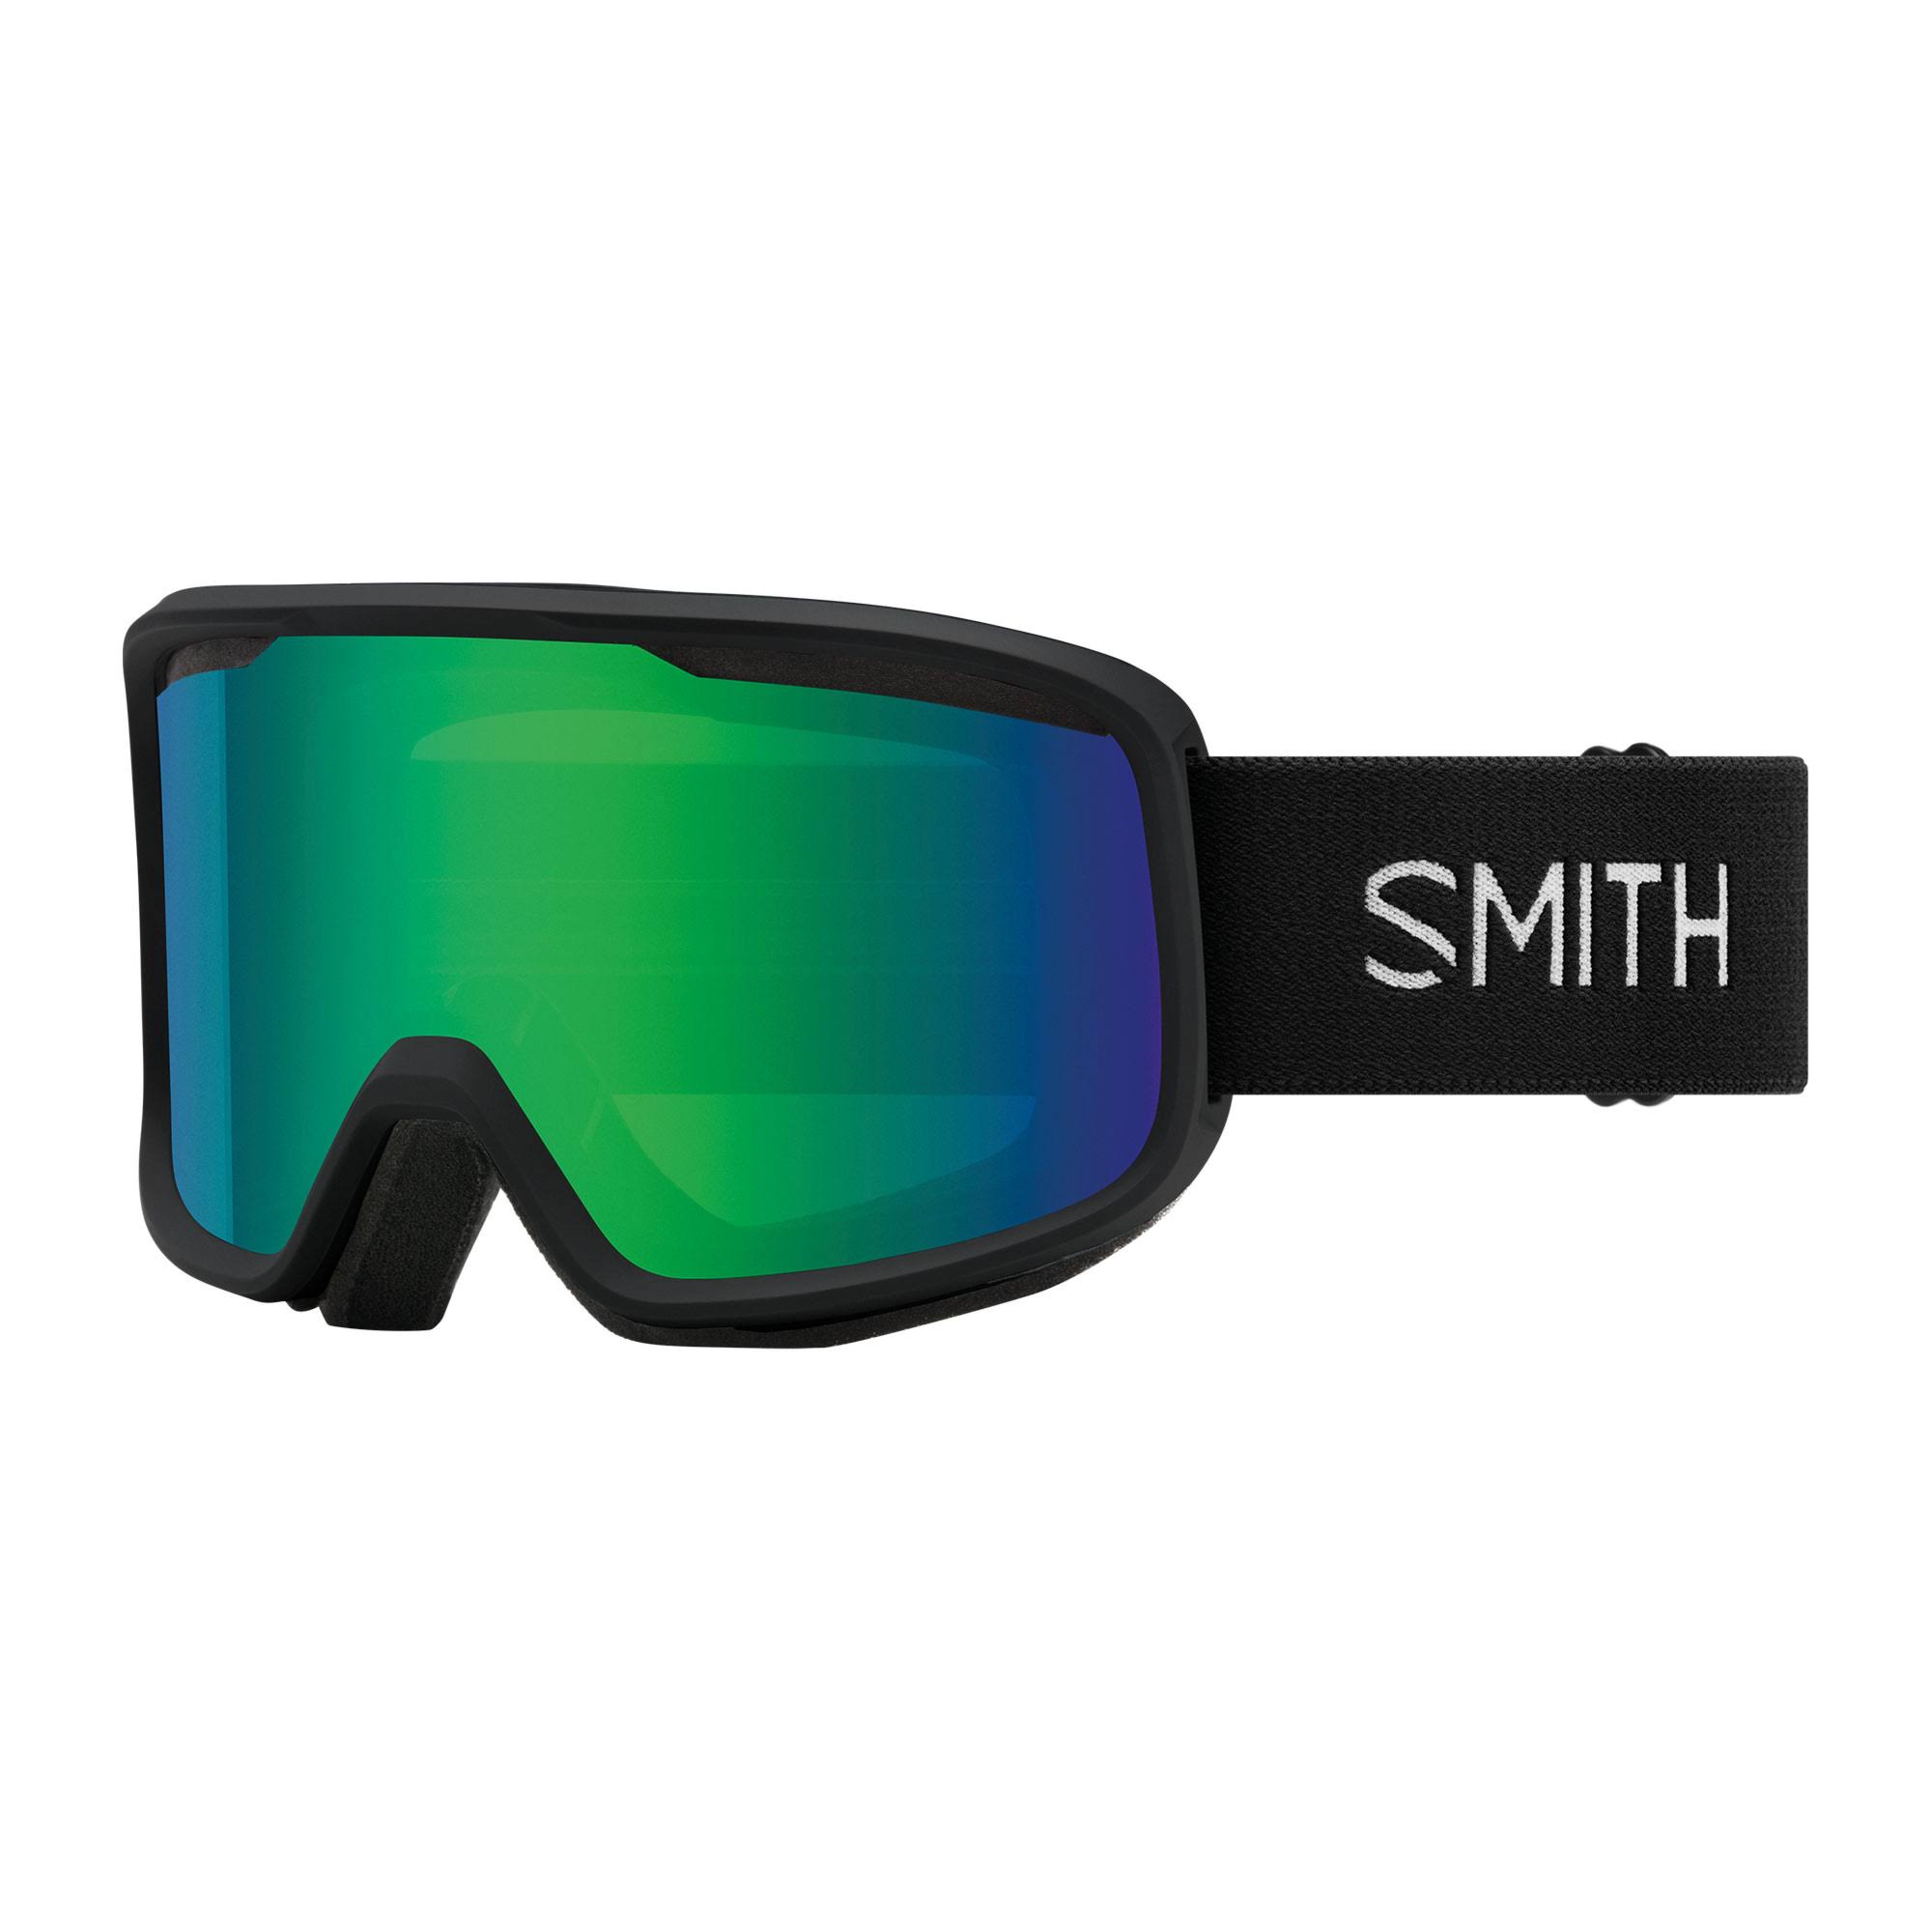 Smith Frontier Goggles - Black/Green Sol-X Mirror